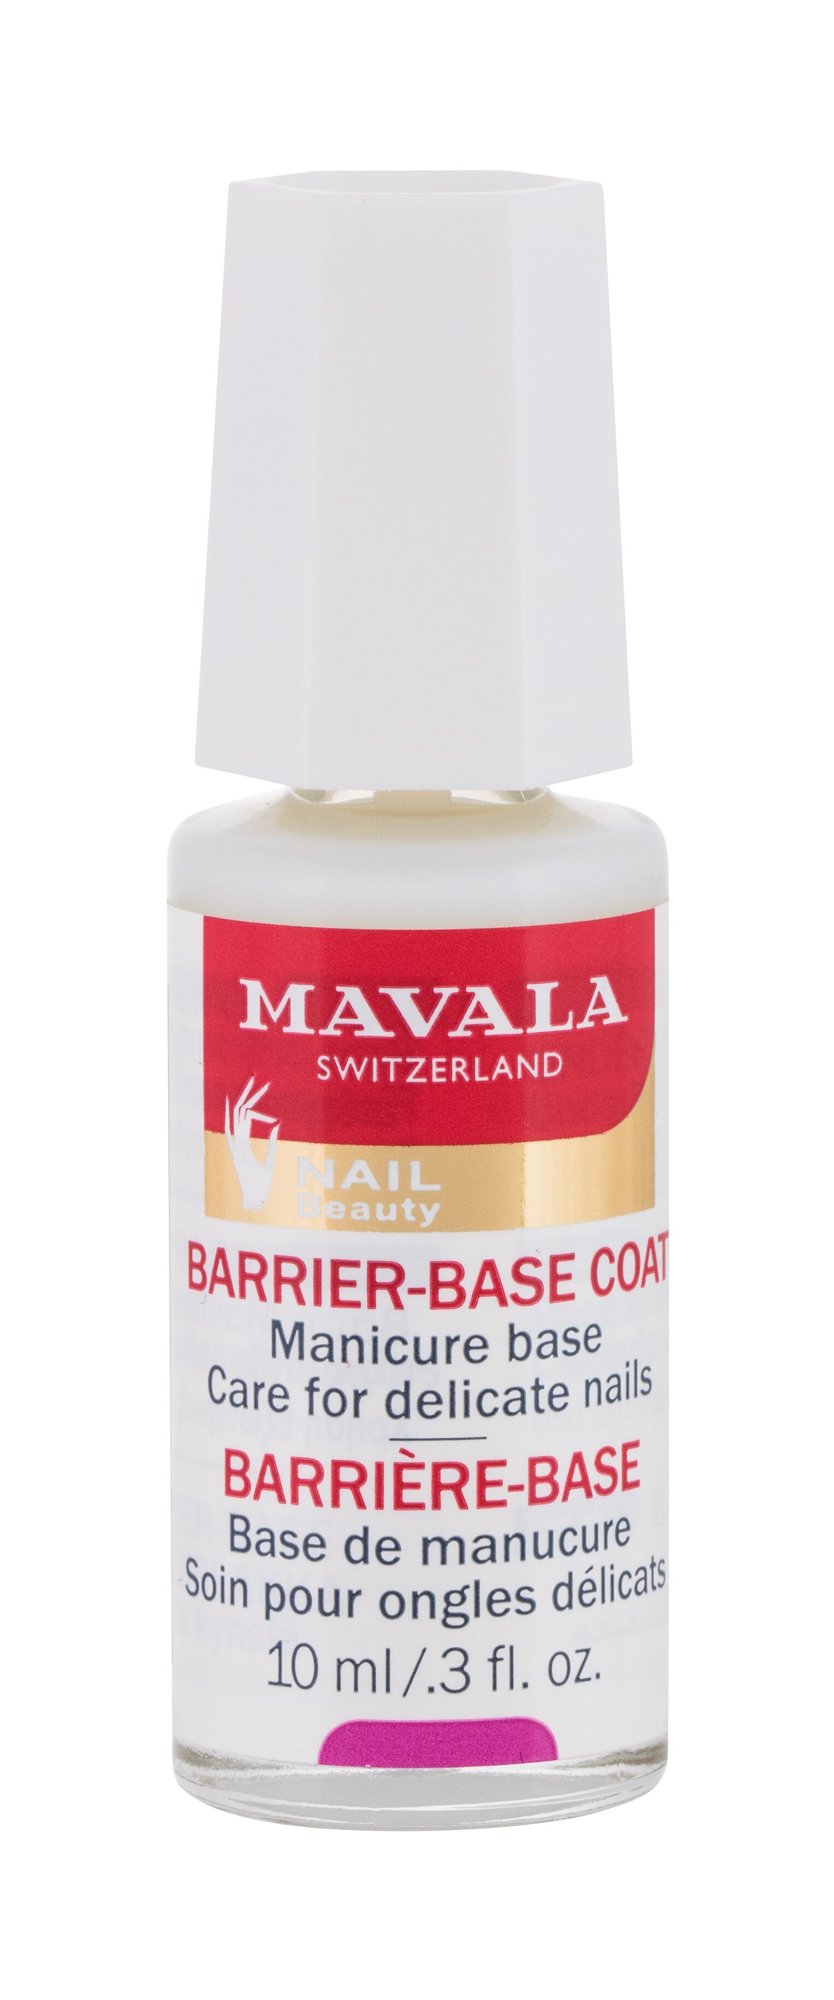 MAVALA Nail Beauty Barrier-Base Coat nagų priežiūrai